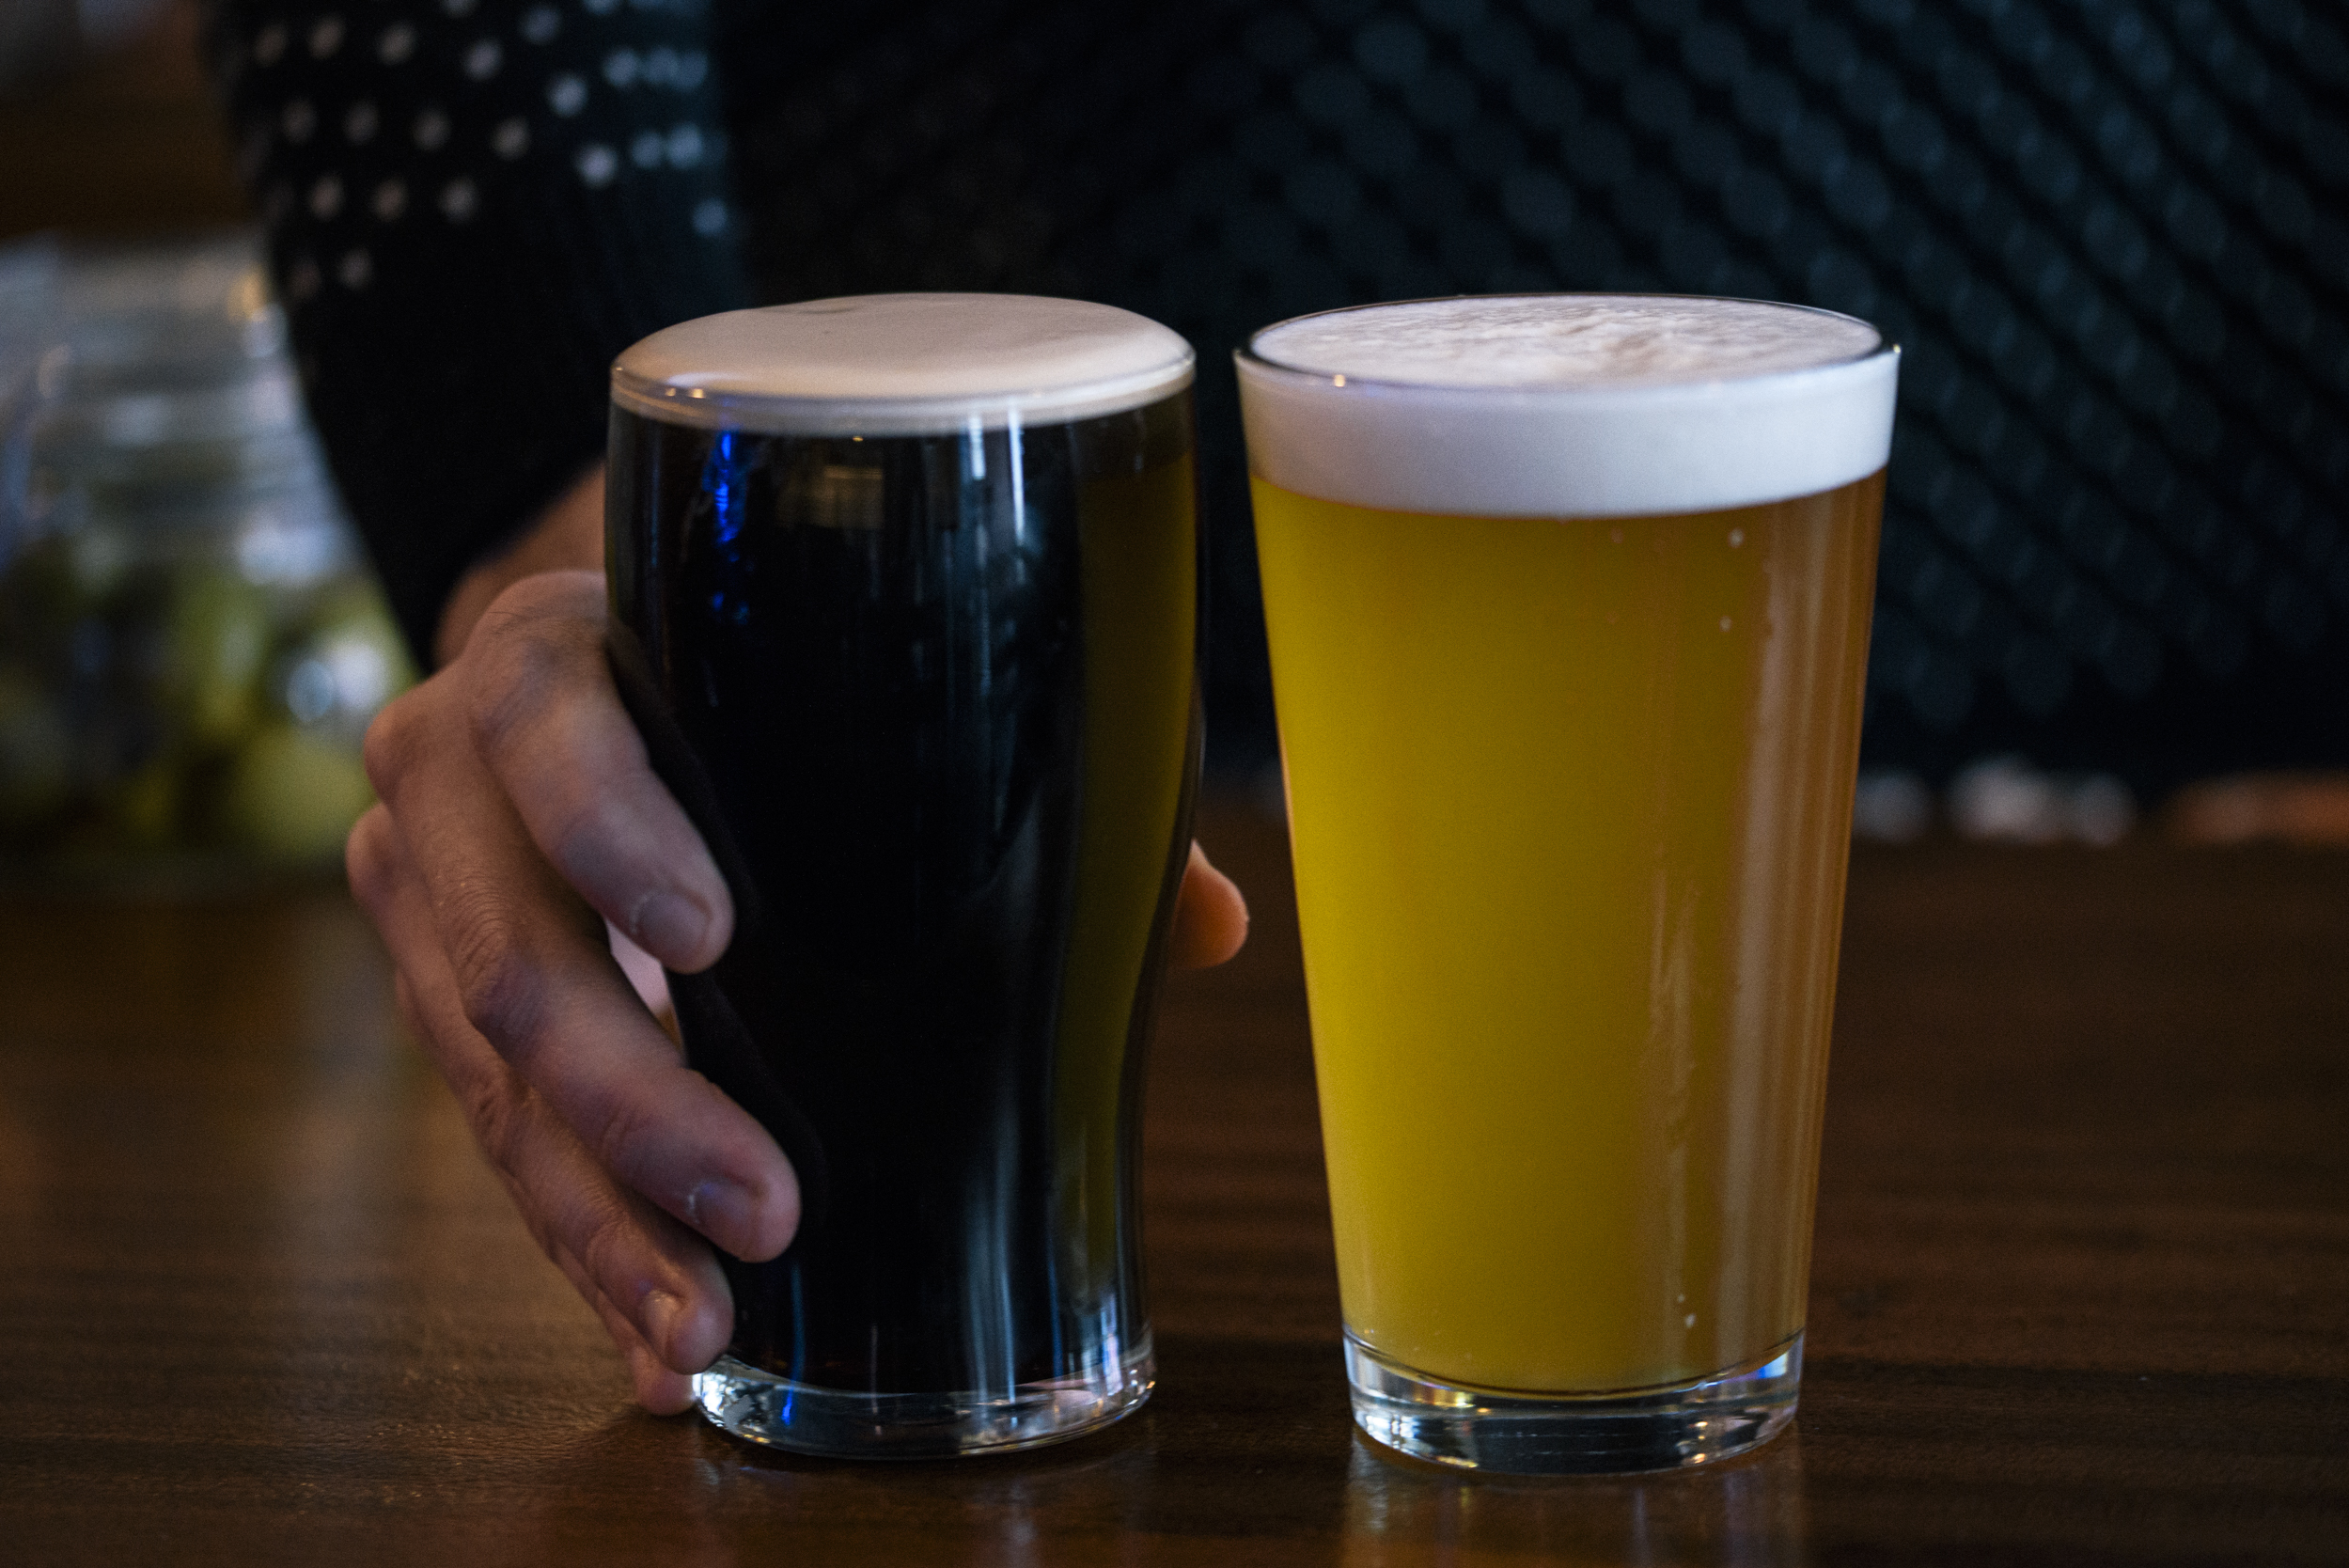 two pints of draft beer in pint glasses, one dark beer and one light beer